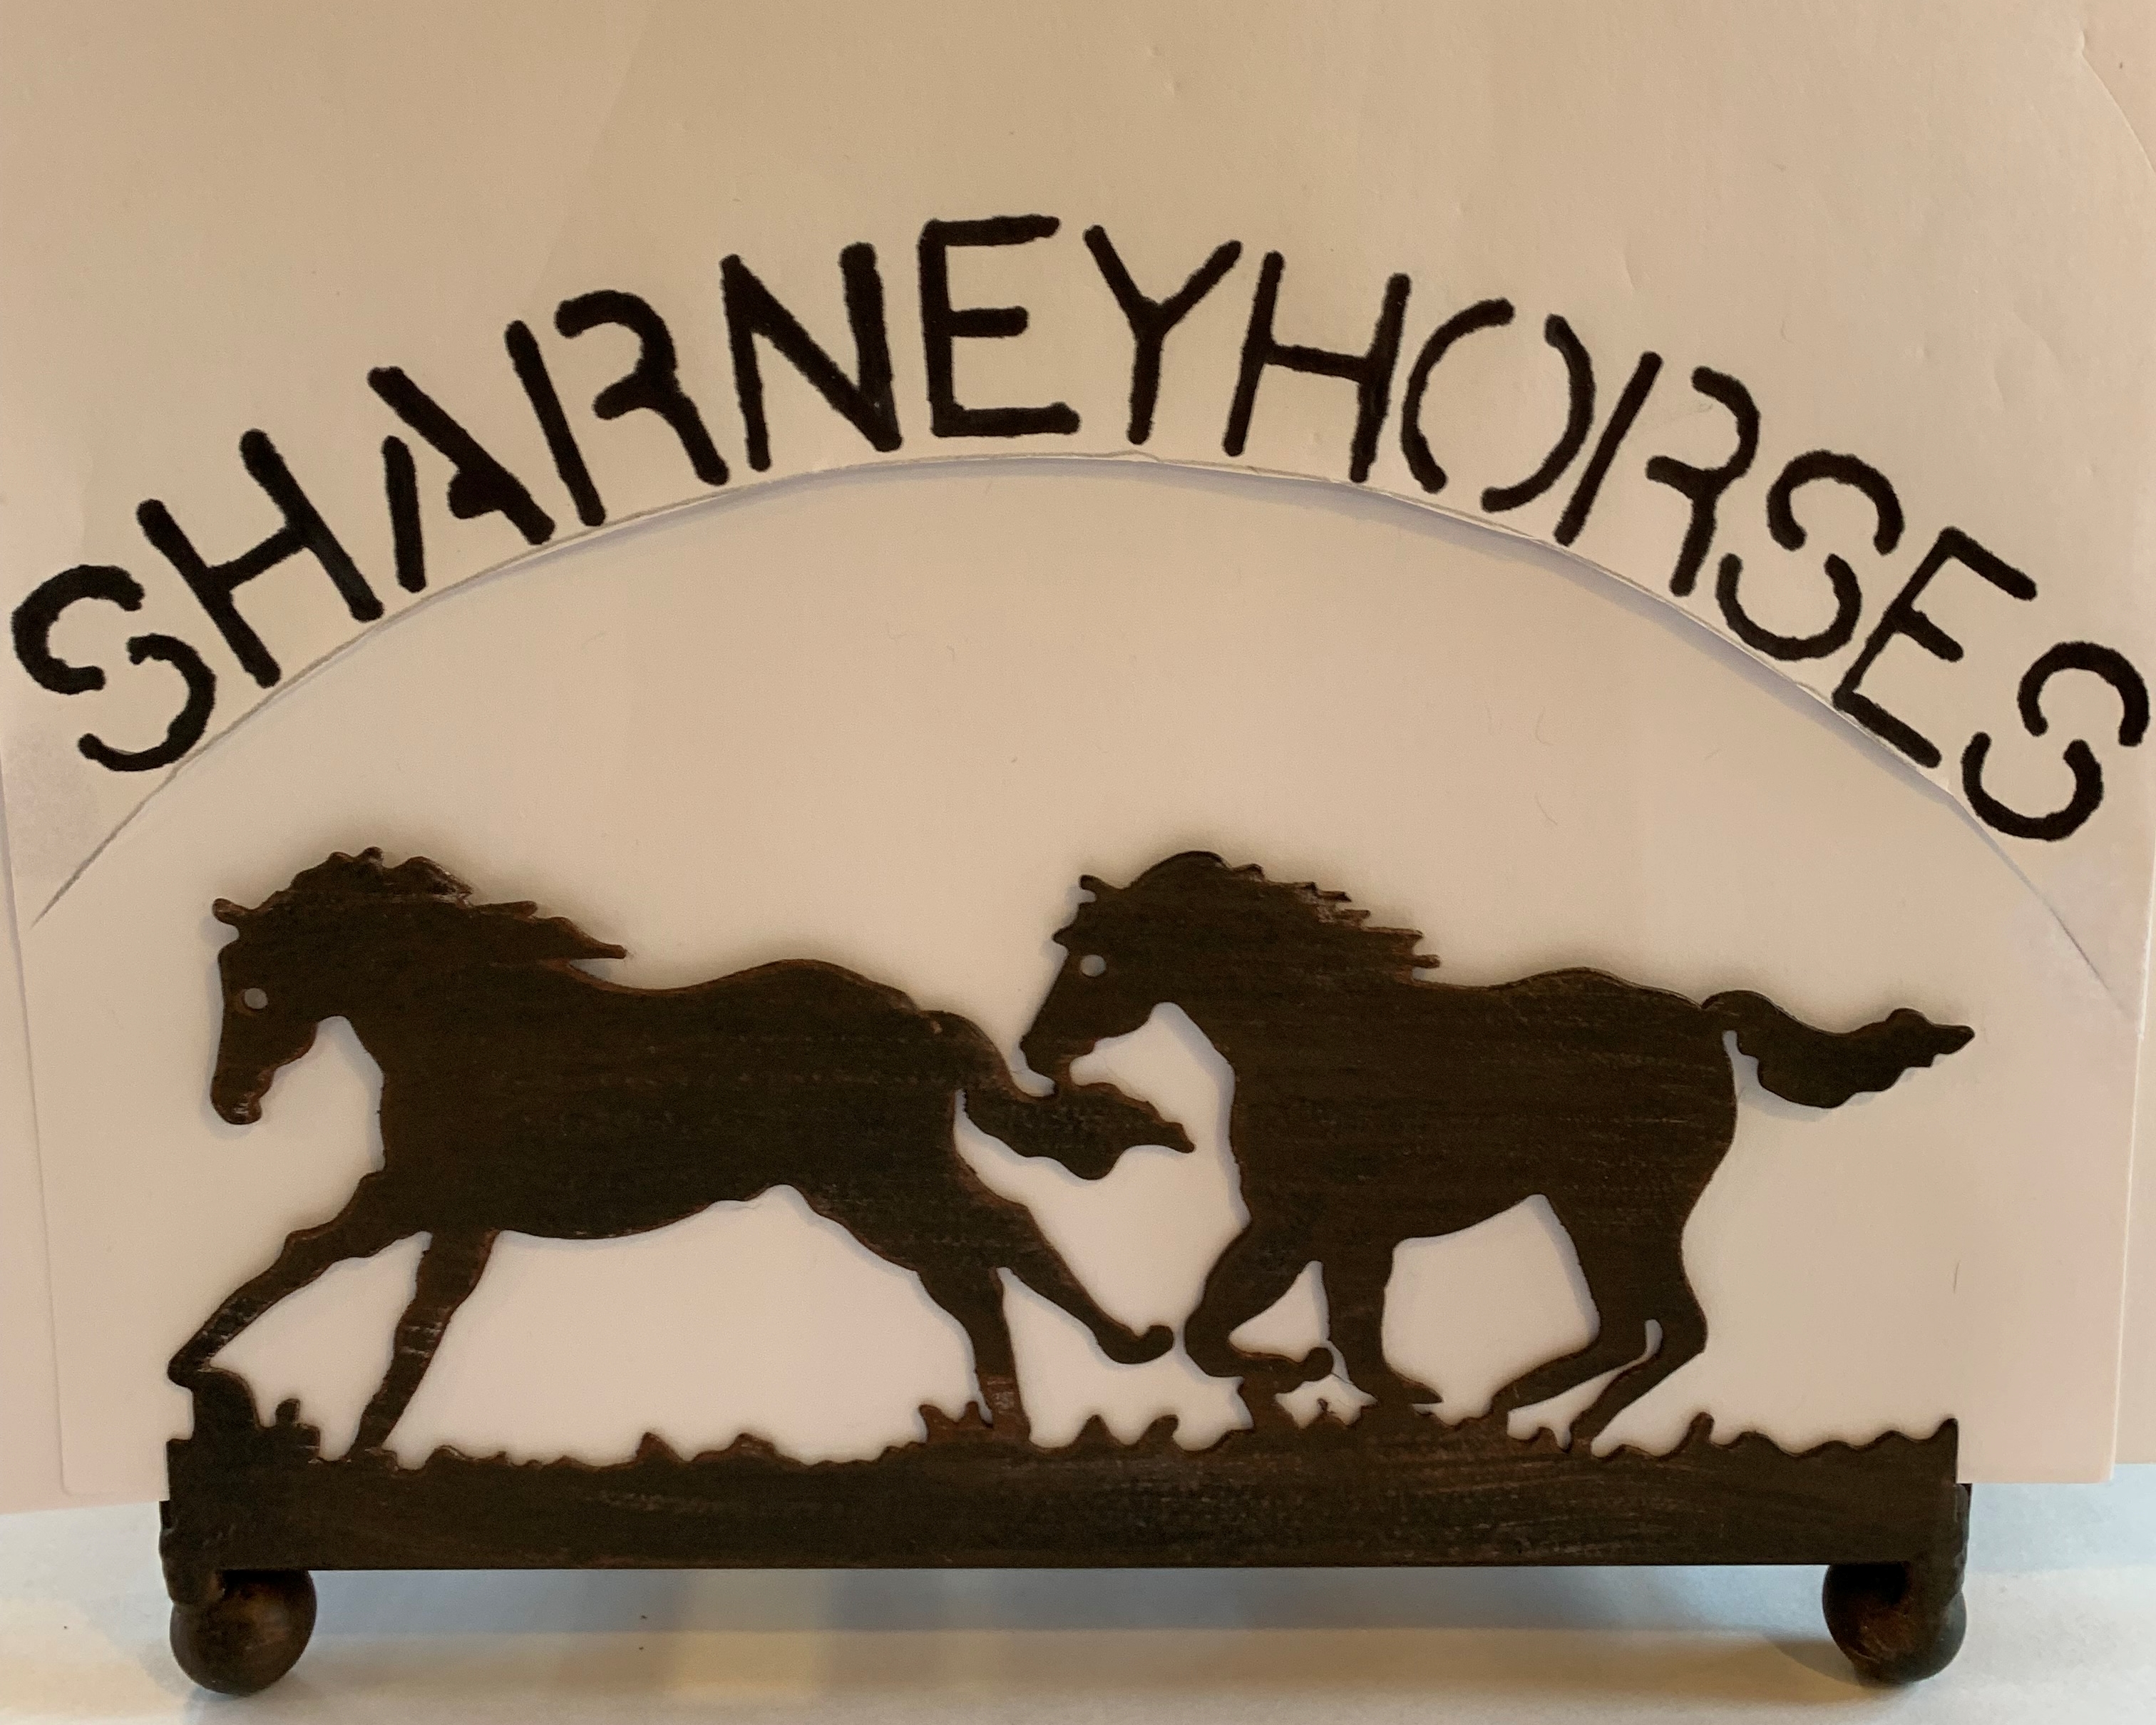 sharneyhorses